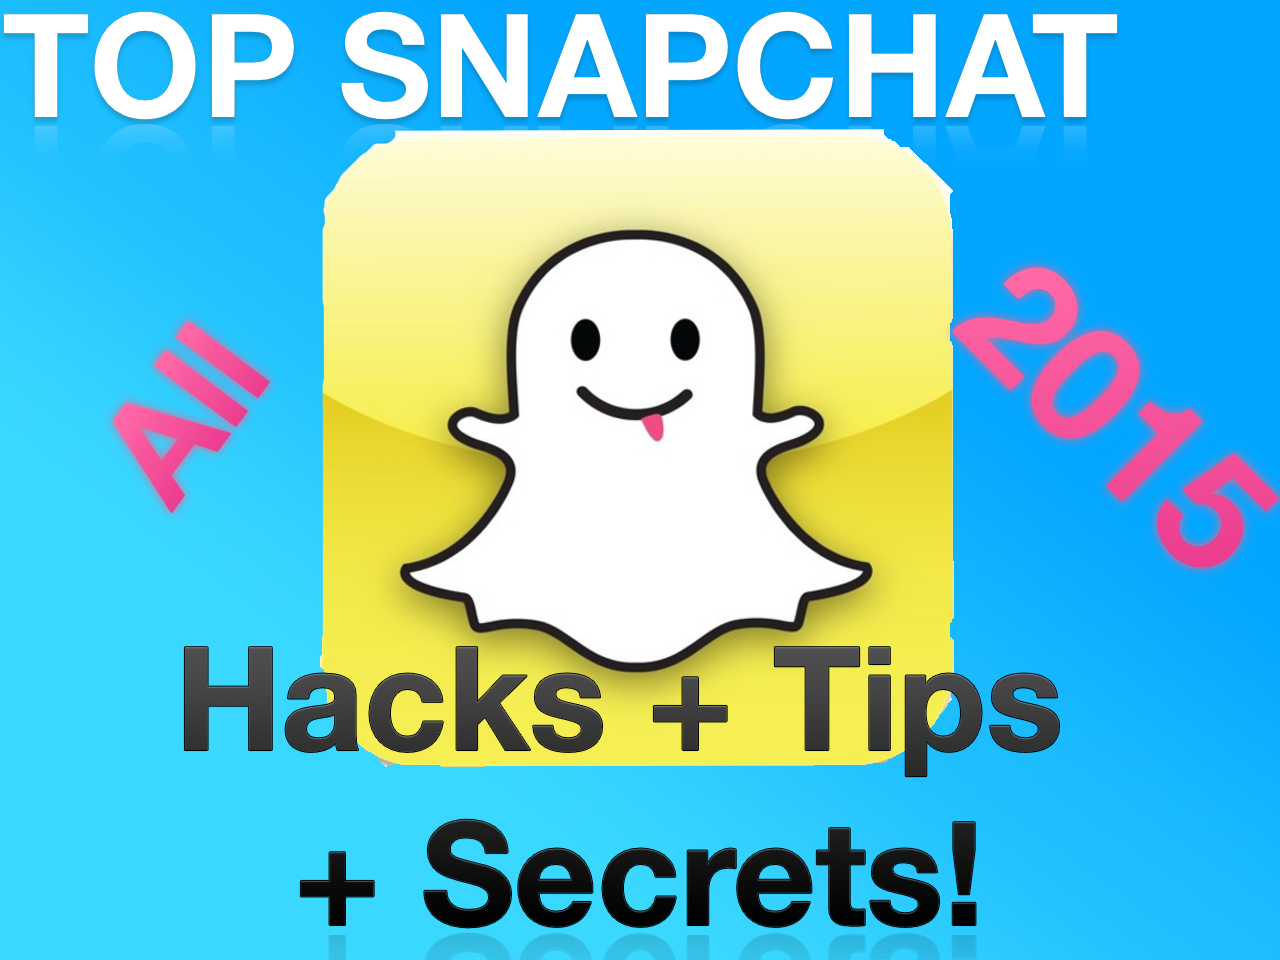 Top Snapchat Hacks Secrets And Tips Tricks Of 2015 No